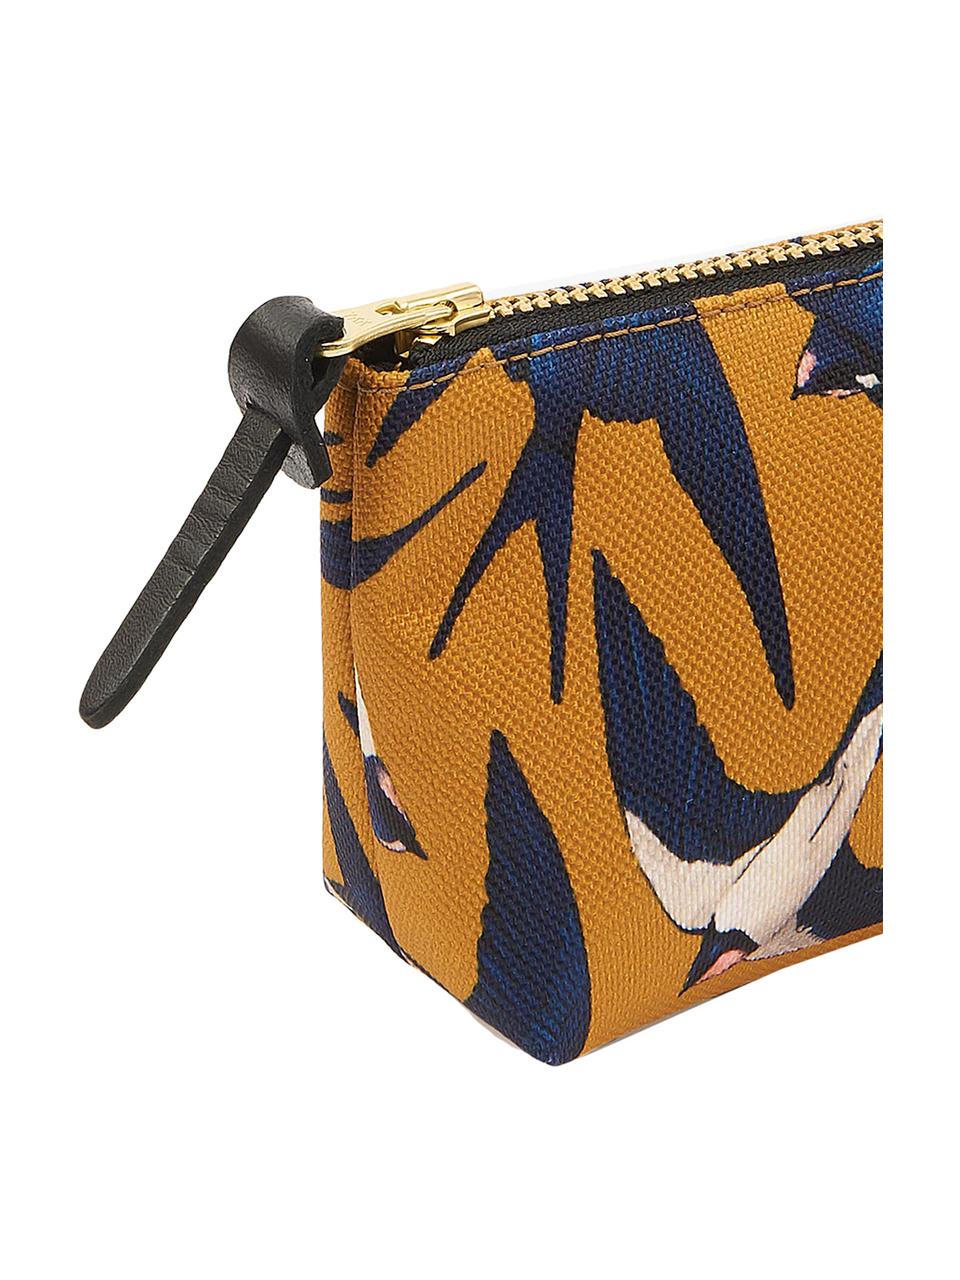 Stifte-Etui Swallow, Polyester, Leder, Gelb, Blau, Beige, 22 x 9 cm